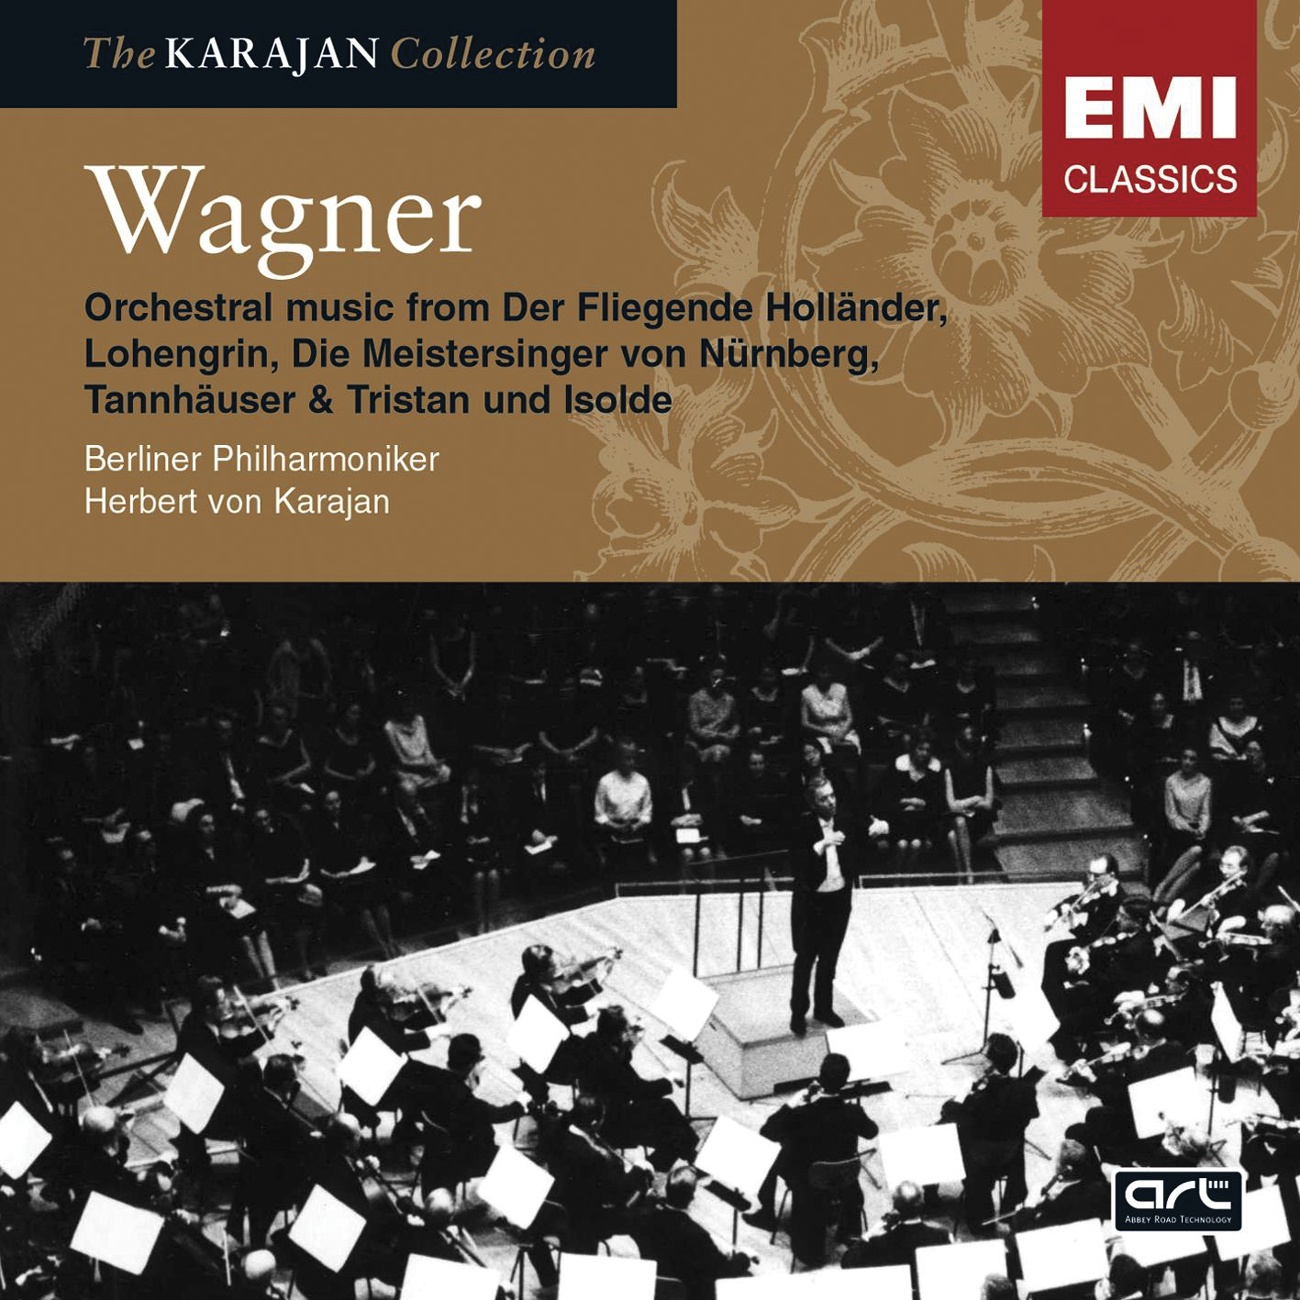 Die Meistersinger von Nürnberg - Overture (1996 Digital Remaster)